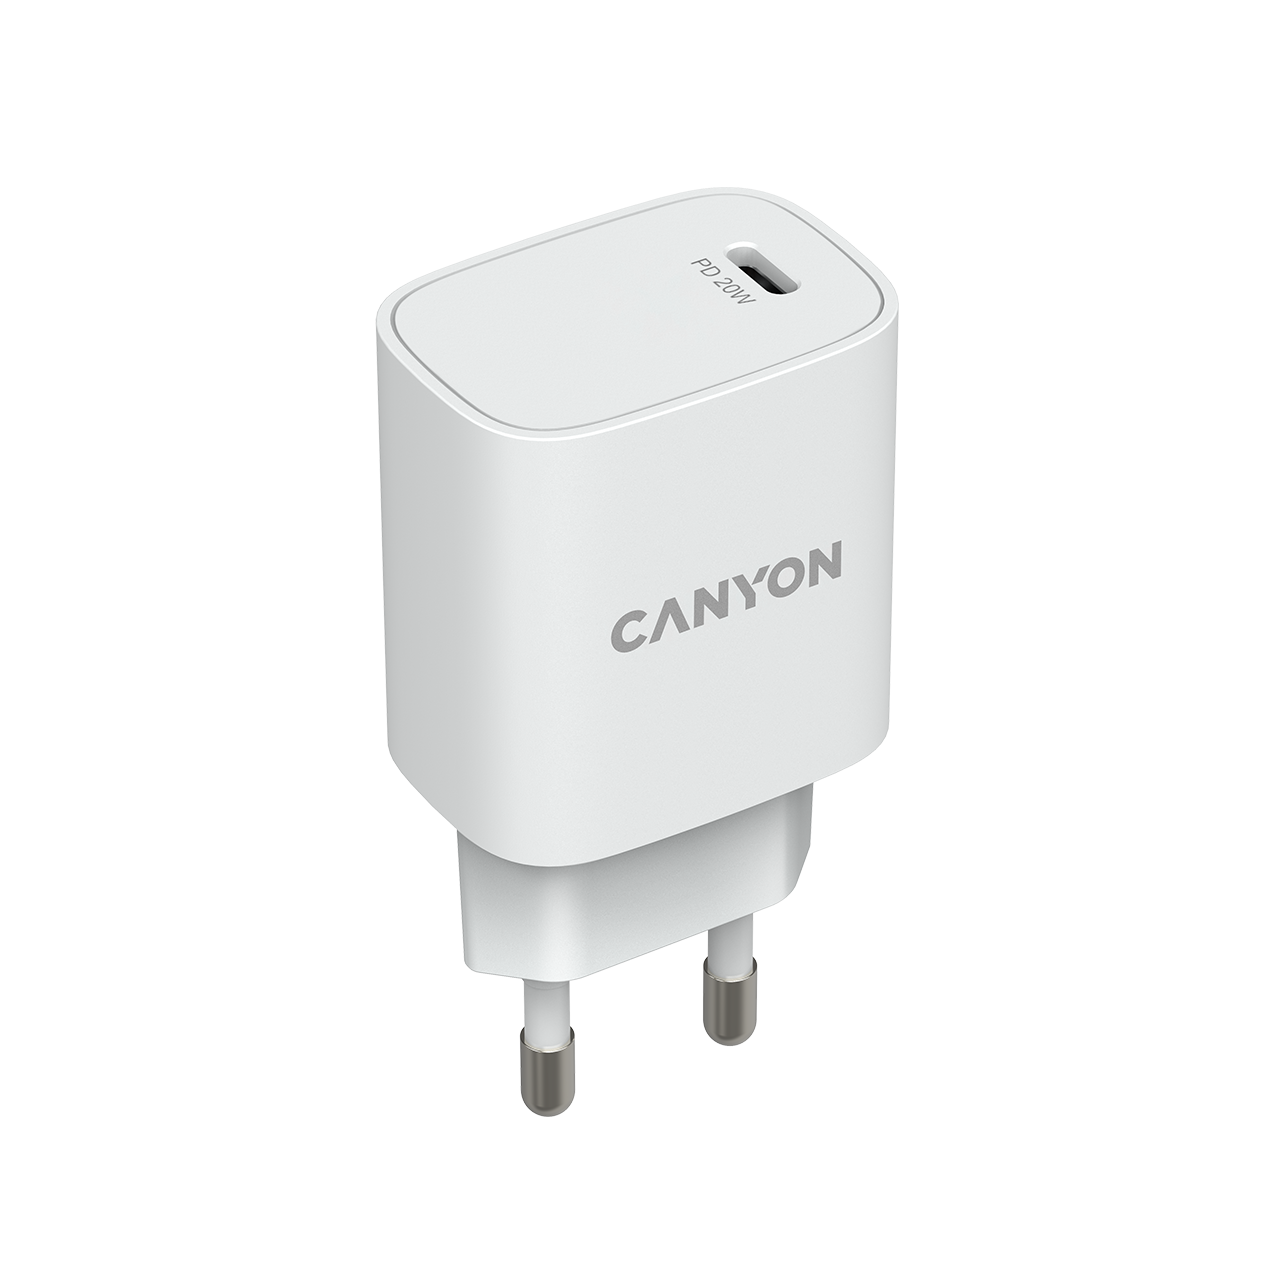 Зарядка canyon. Сетевое зарядное устройство USB Canyon h-20. Canyon BSP-4 (CNE-cbtsp4r).